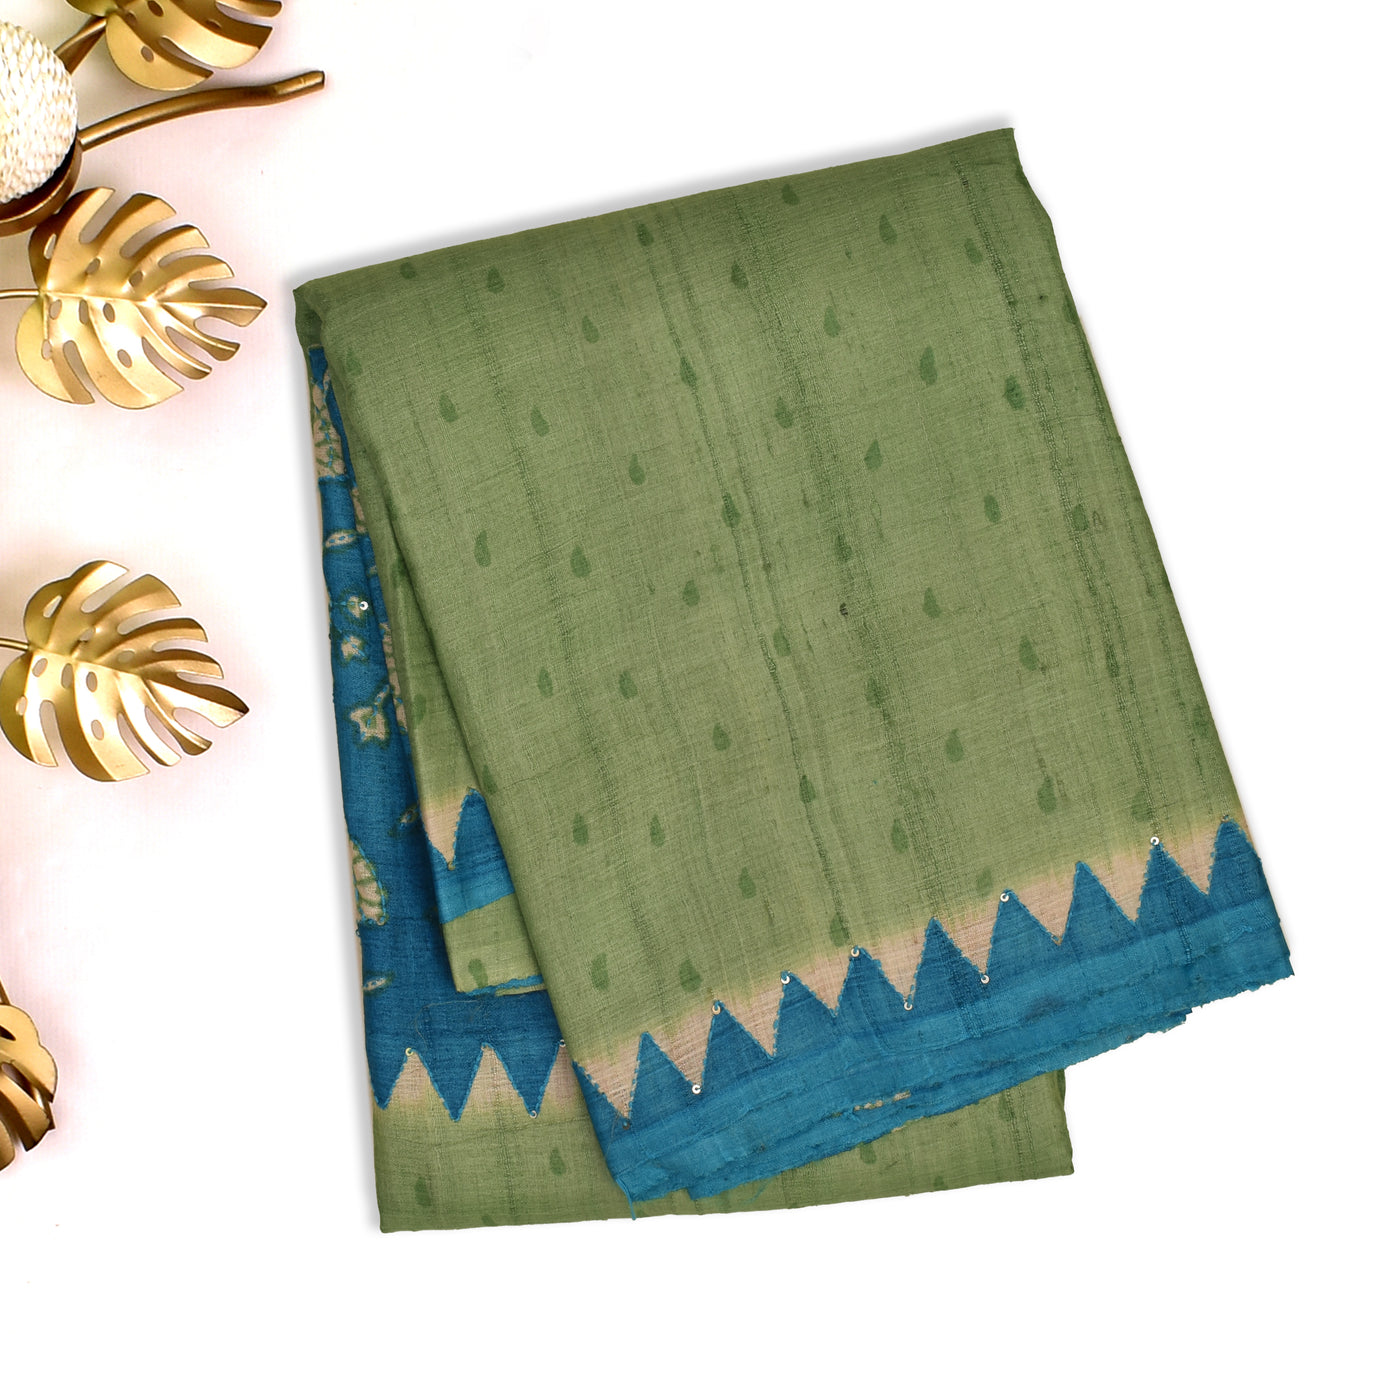 Mehandi Green Tussar Silk Saree with Small Printed Design